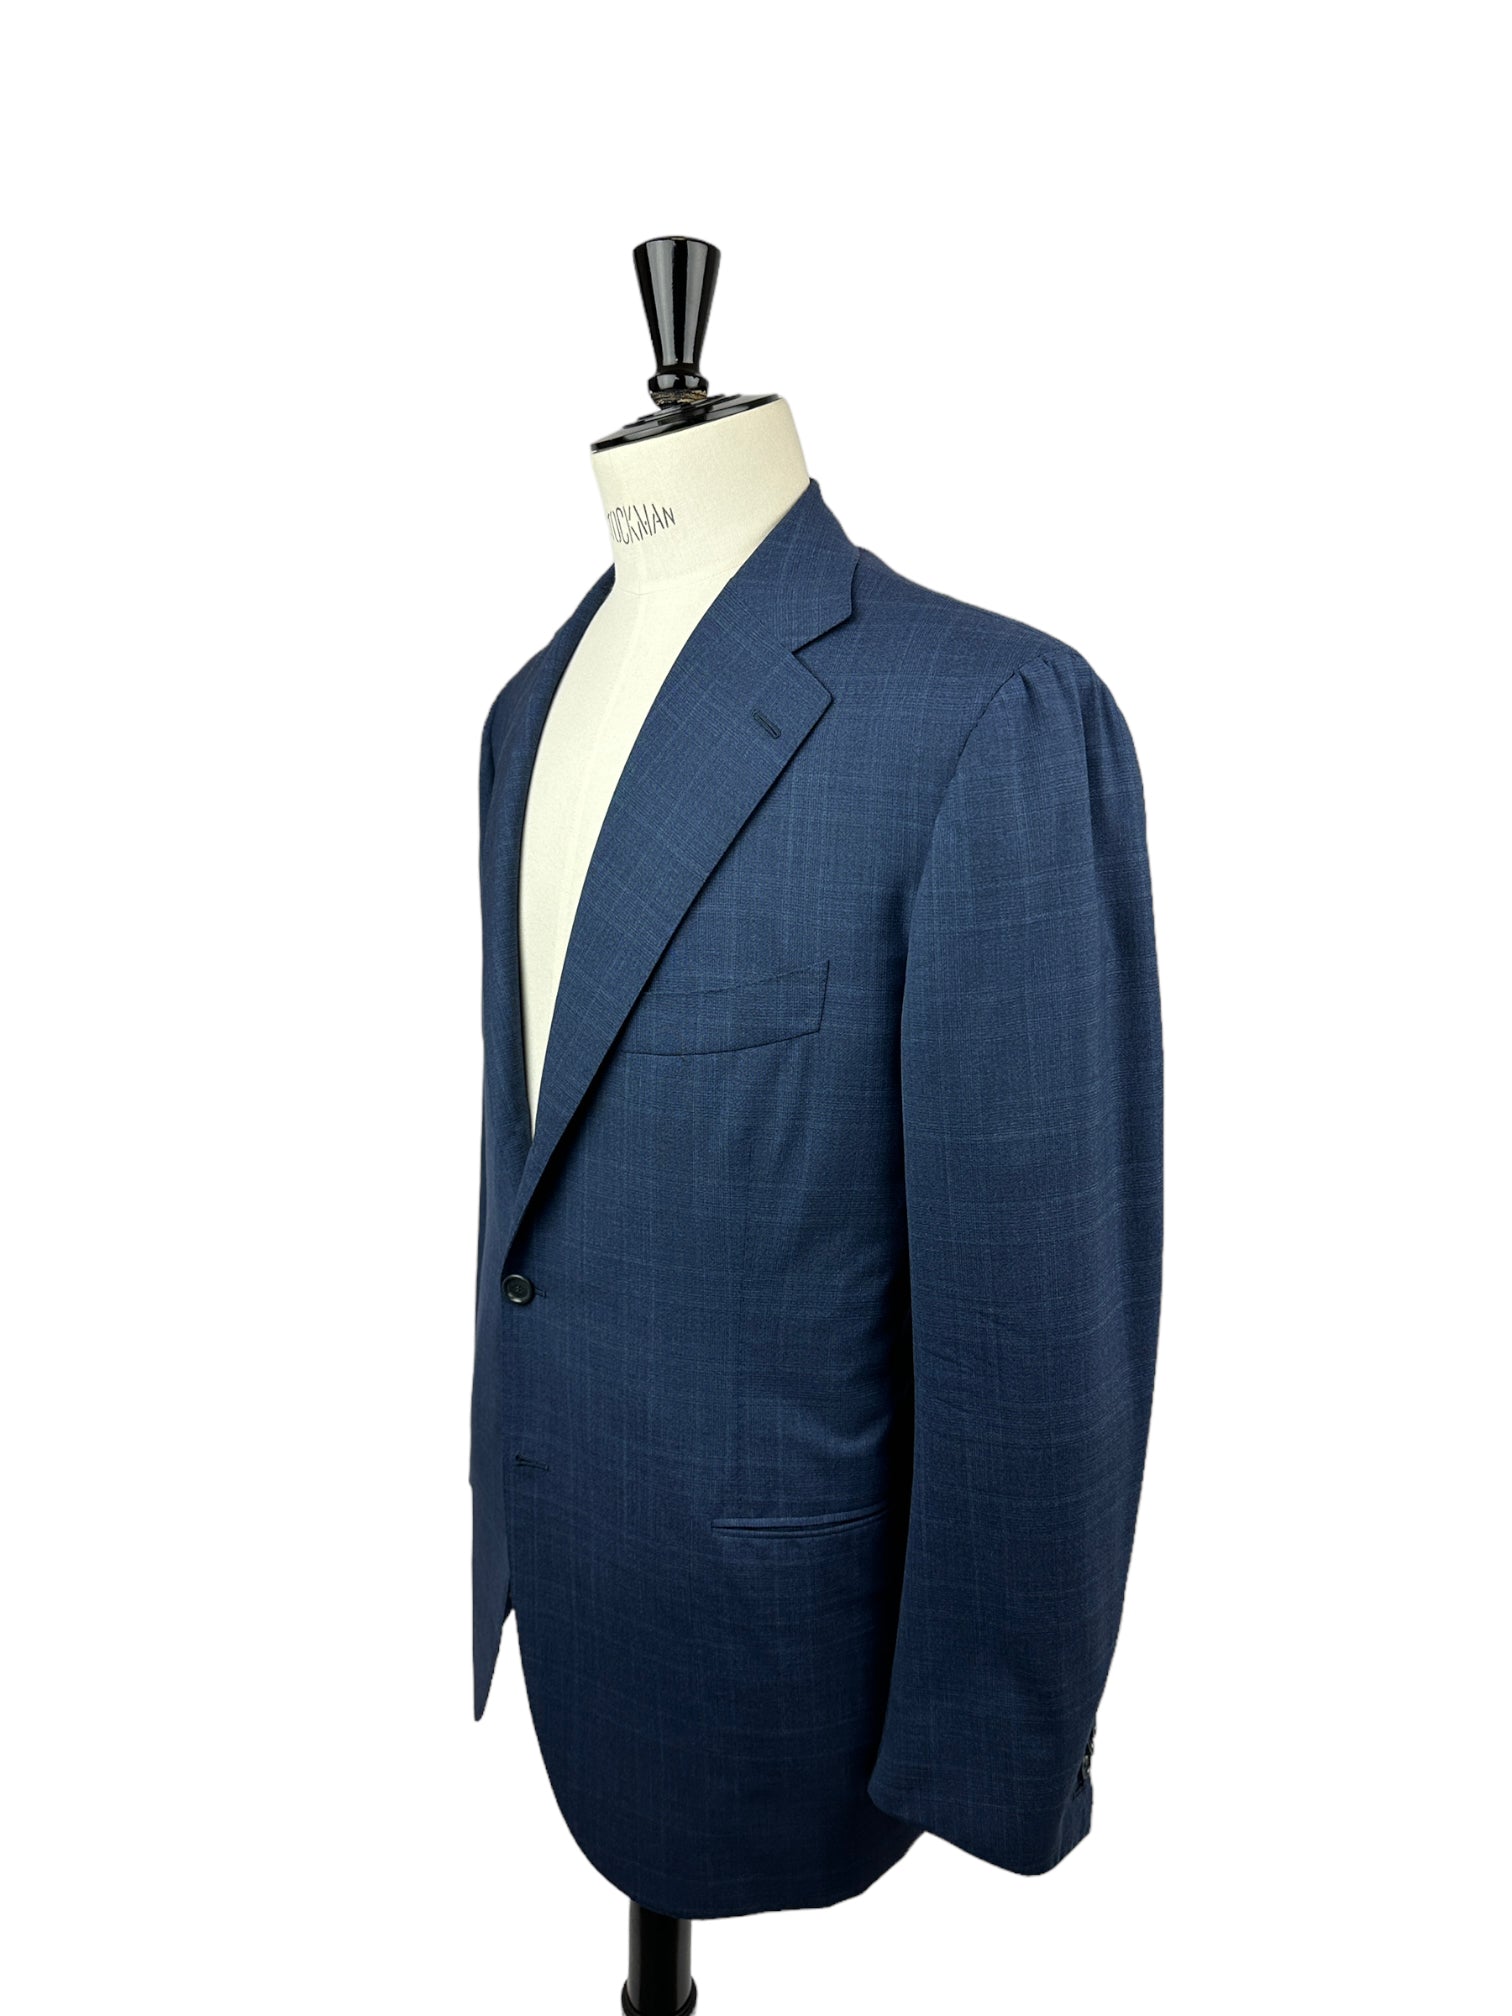 Cesare Attolini Blue Glenplaid Super 150's Suit